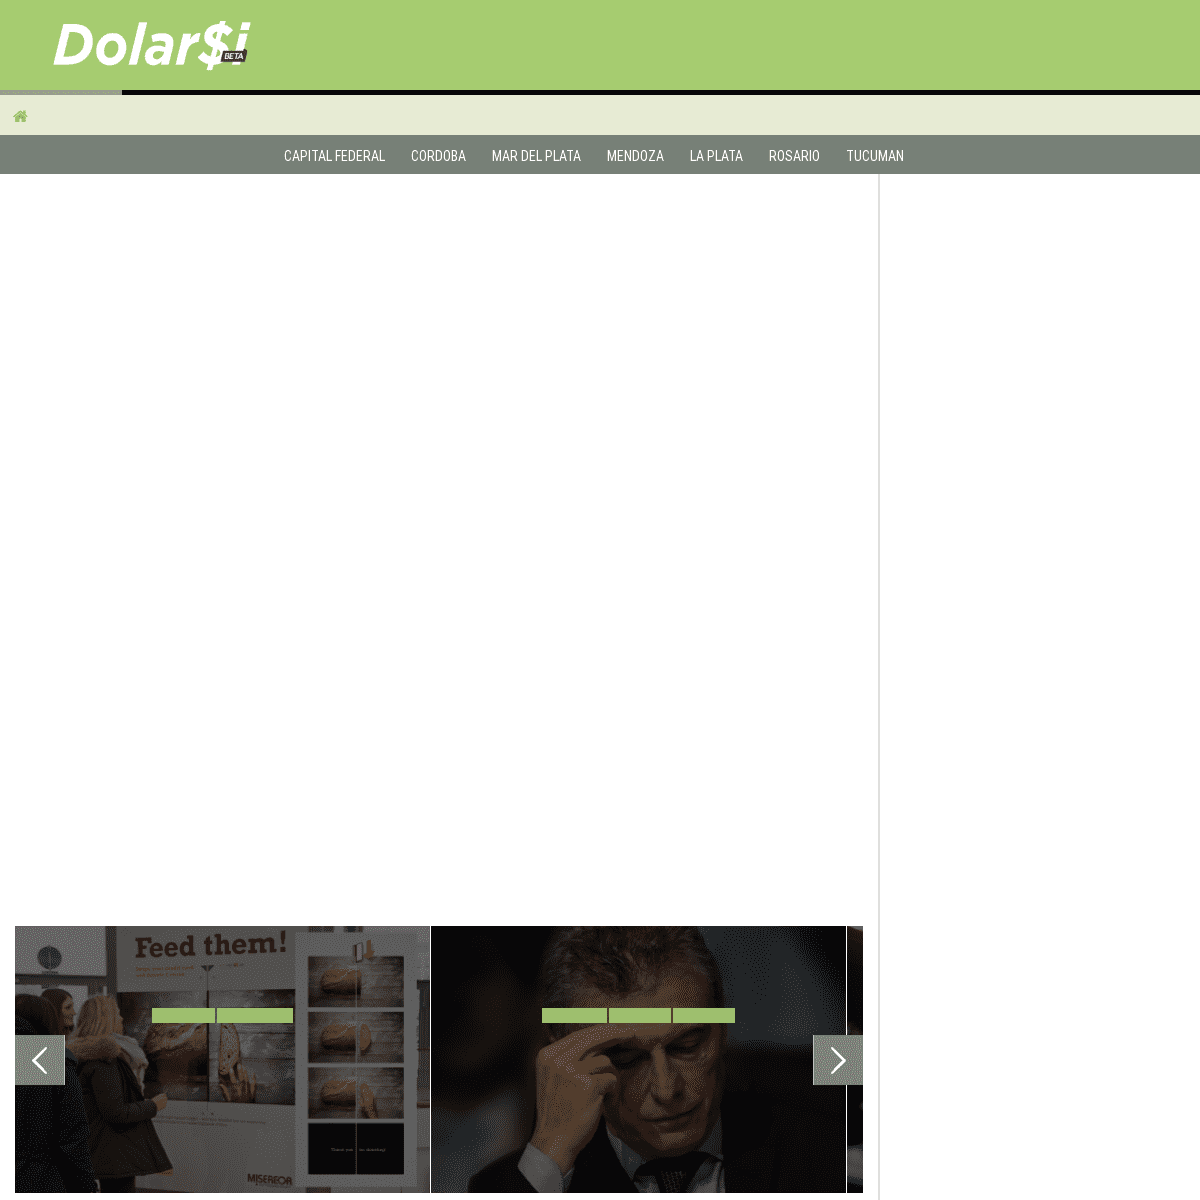 A complete backup of dolarsi.com